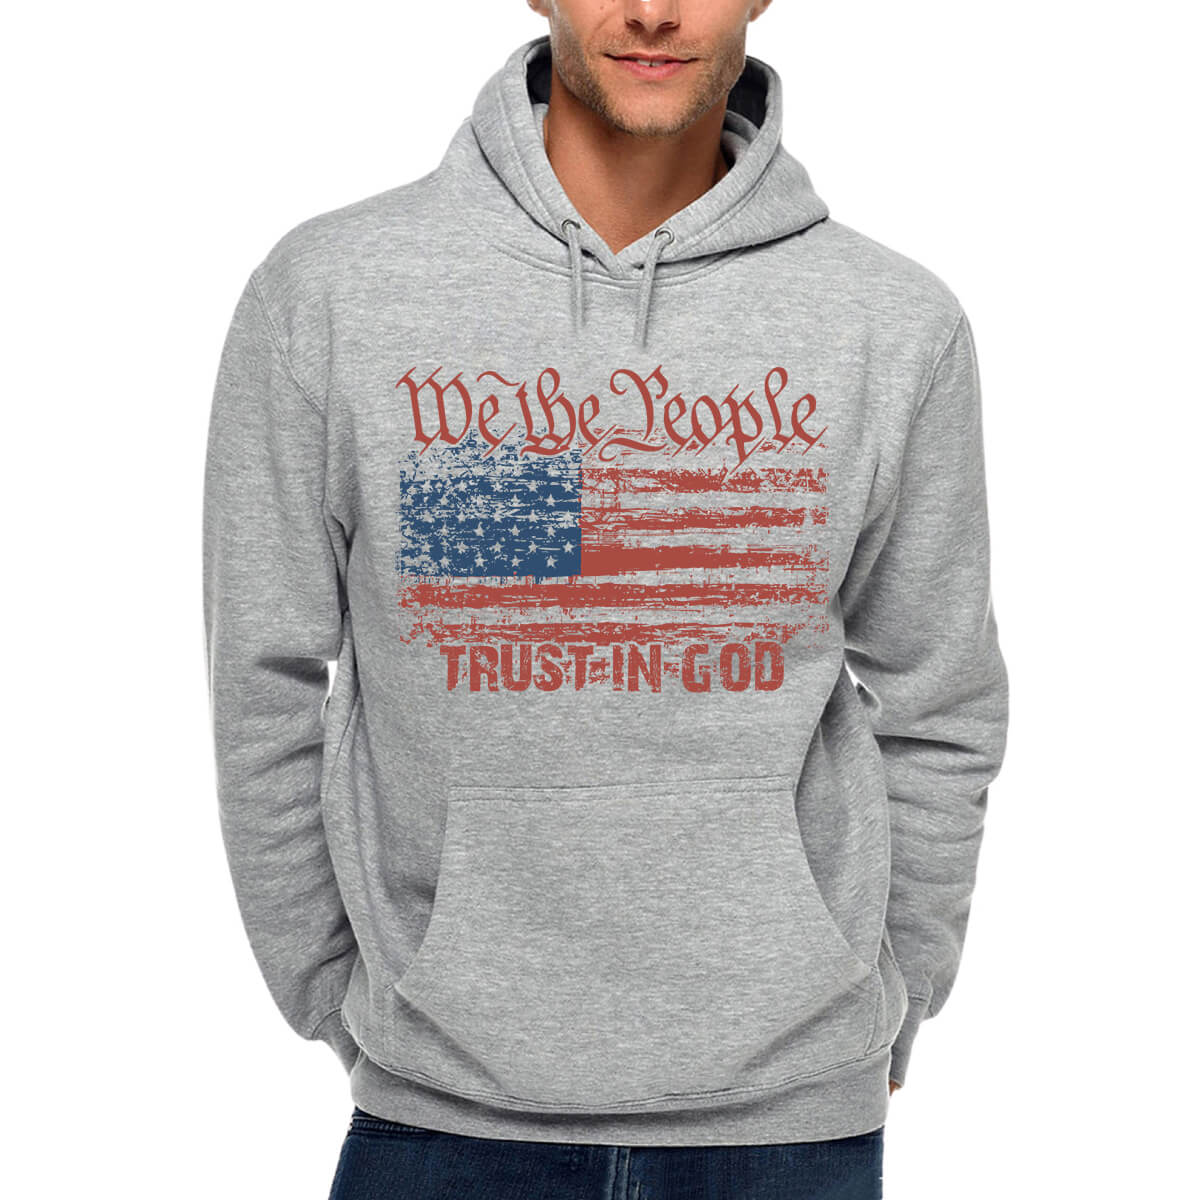 We The People Trust In God Men's Sweatshirt Hoodie